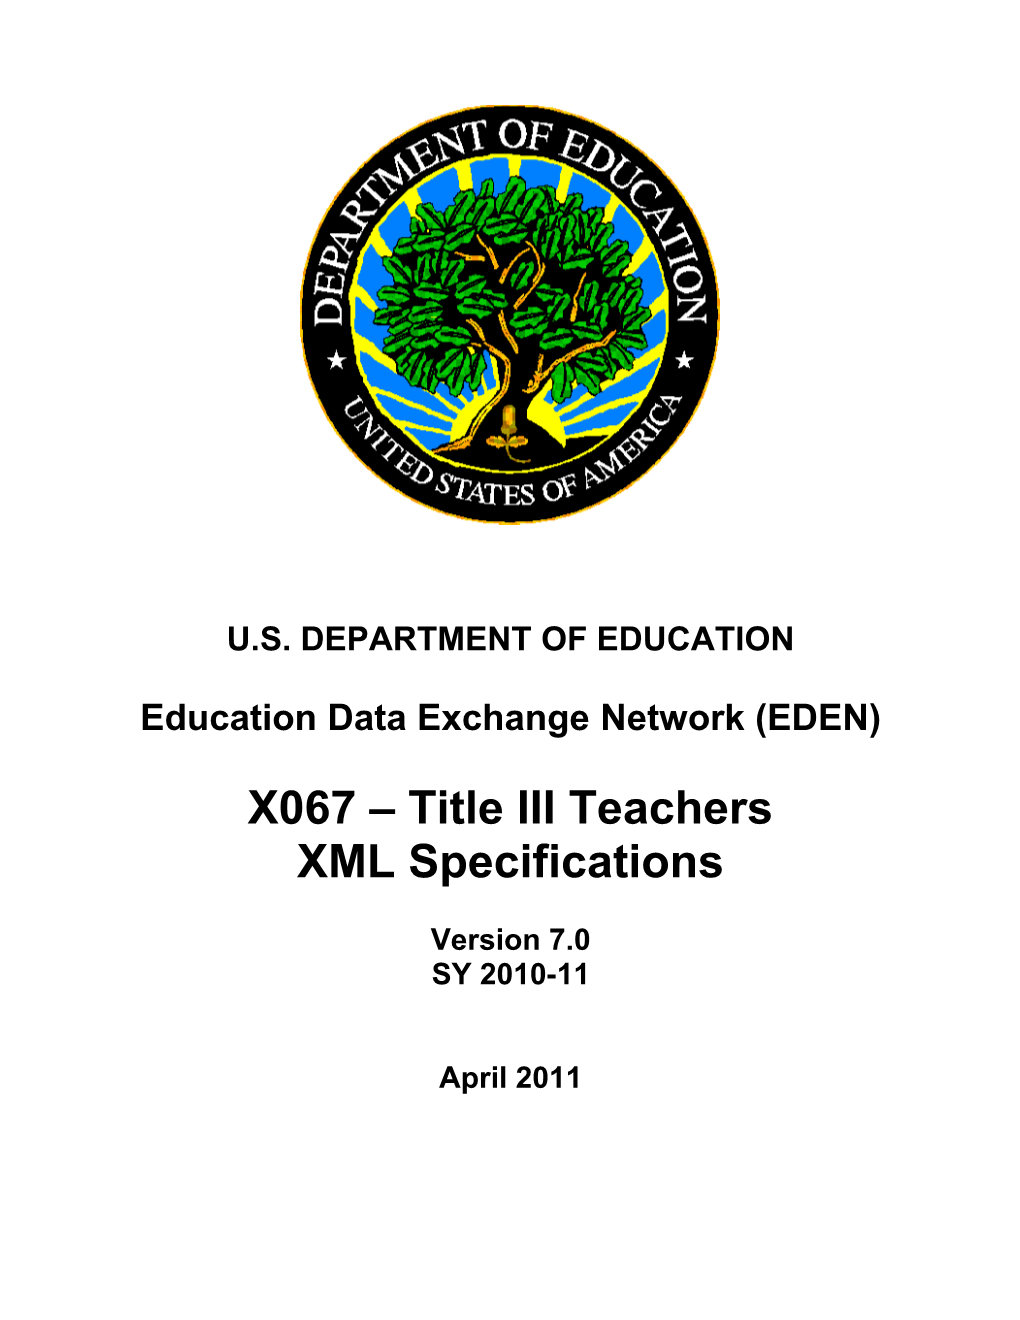 Title III Teachers XML Specifications